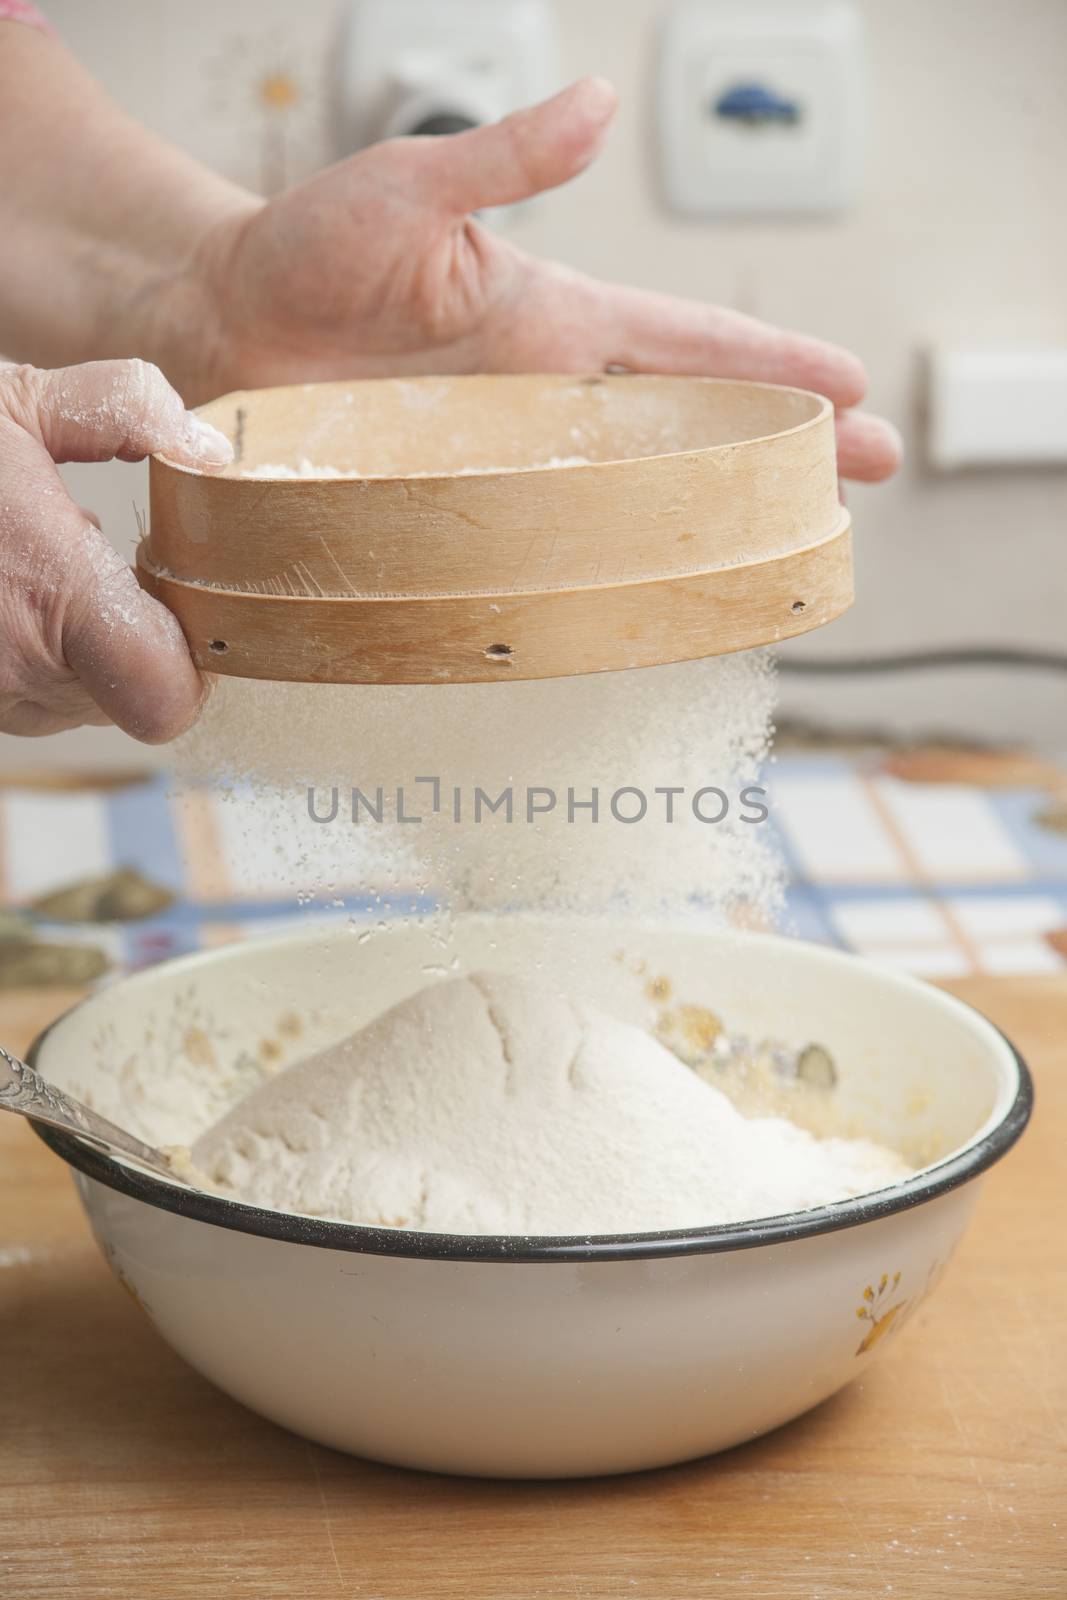 Women's hands preparing flour before baking pie.